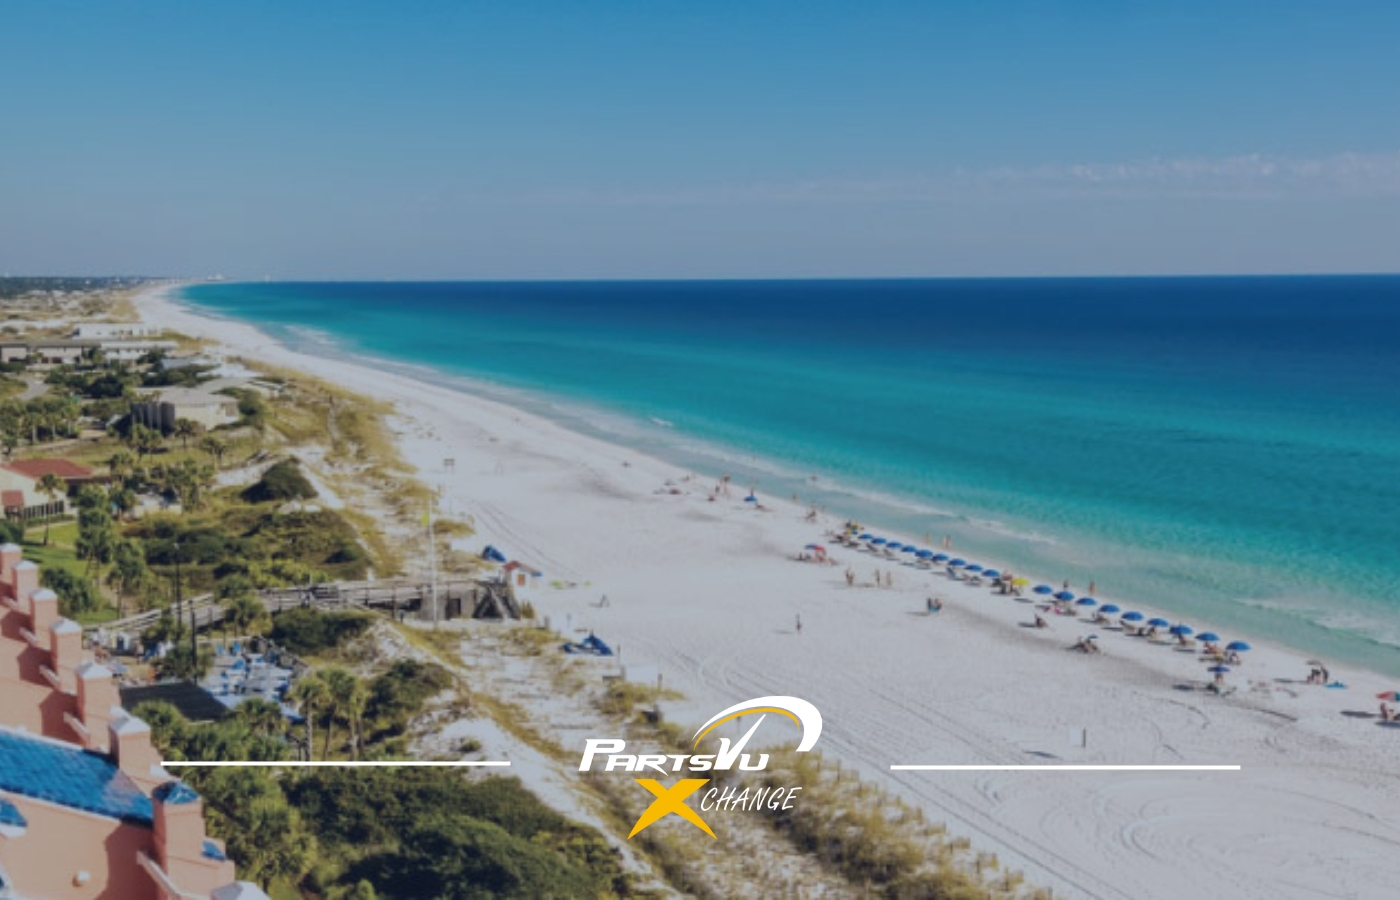 The Sugar-White Beaches of Destin, Florida – A Gulf Paradise